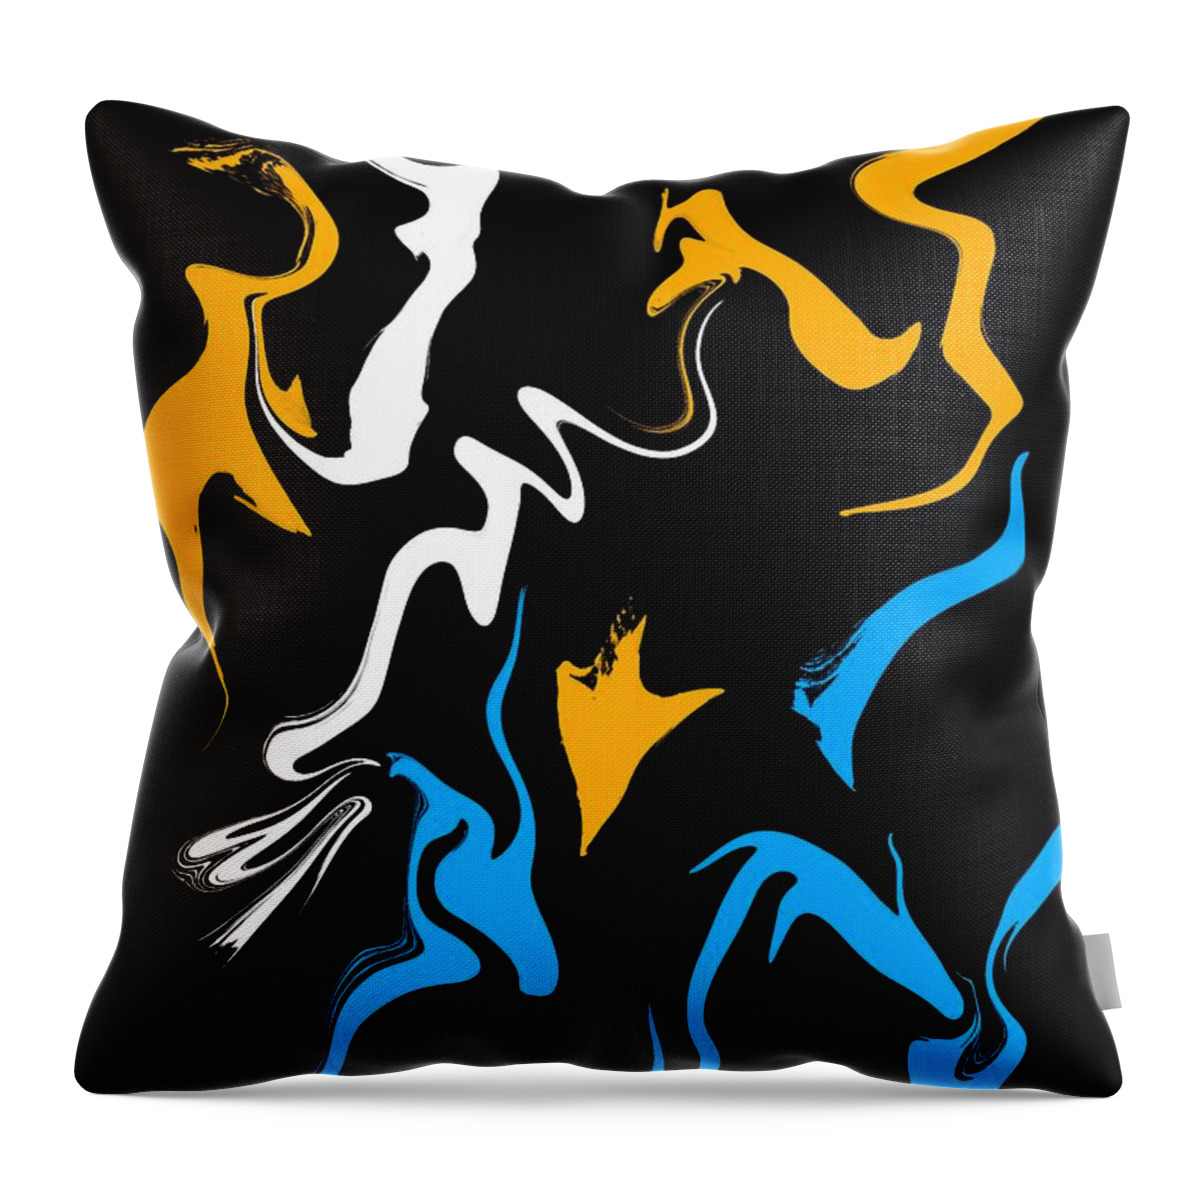  Throw Pillow featuring the digital art Mountain Man by Michelle Hoffmann